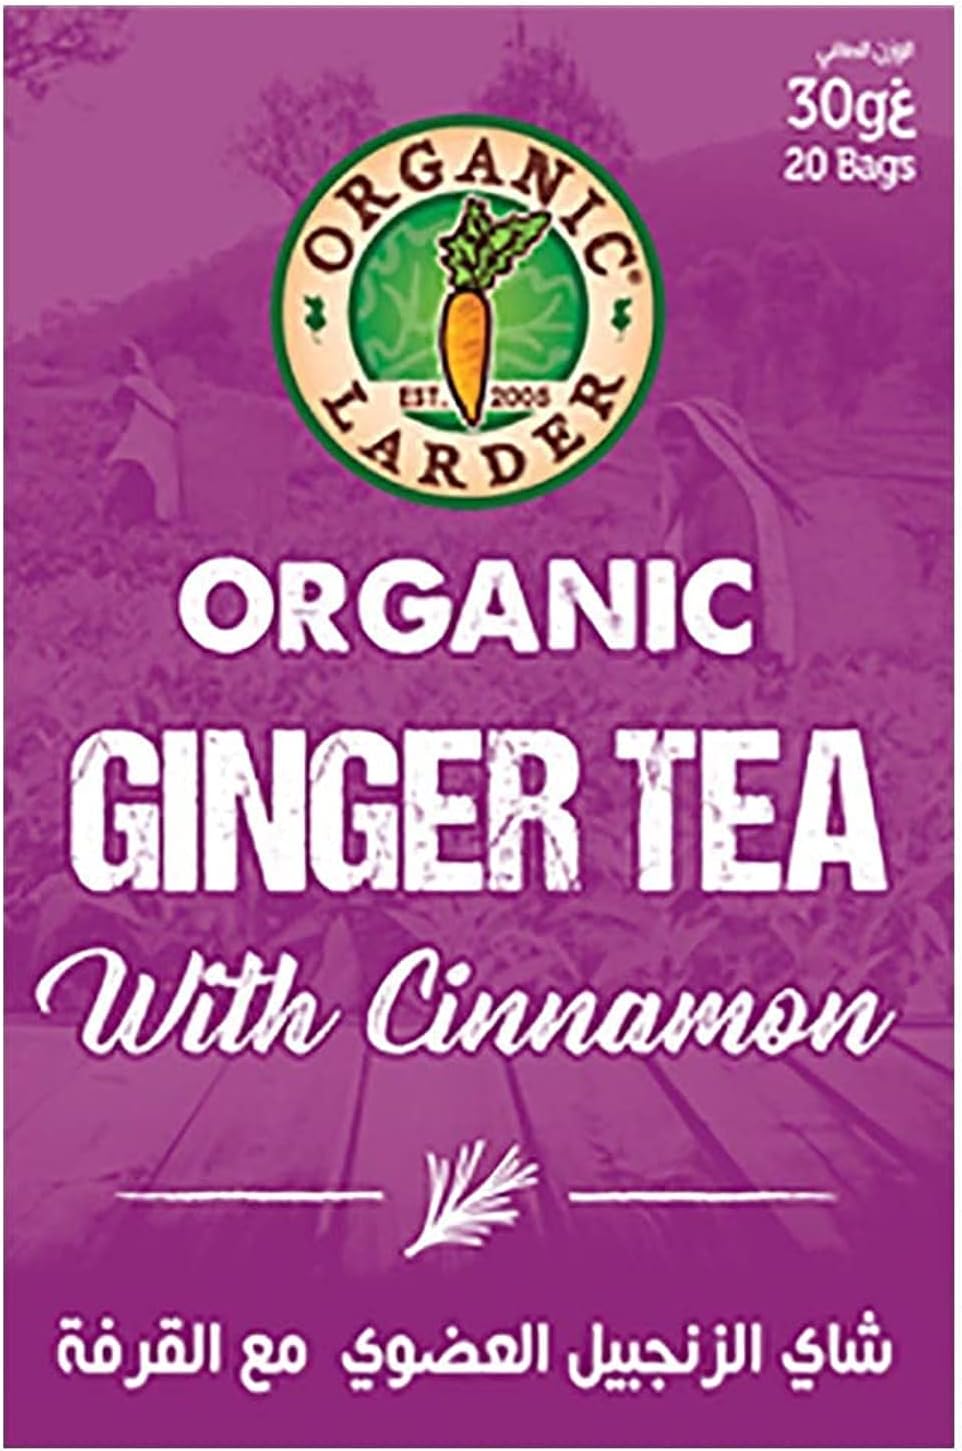 ORGANIC LARDER Ginger Tea With Cinnamon, 30g - Organic, Vegan, Natural